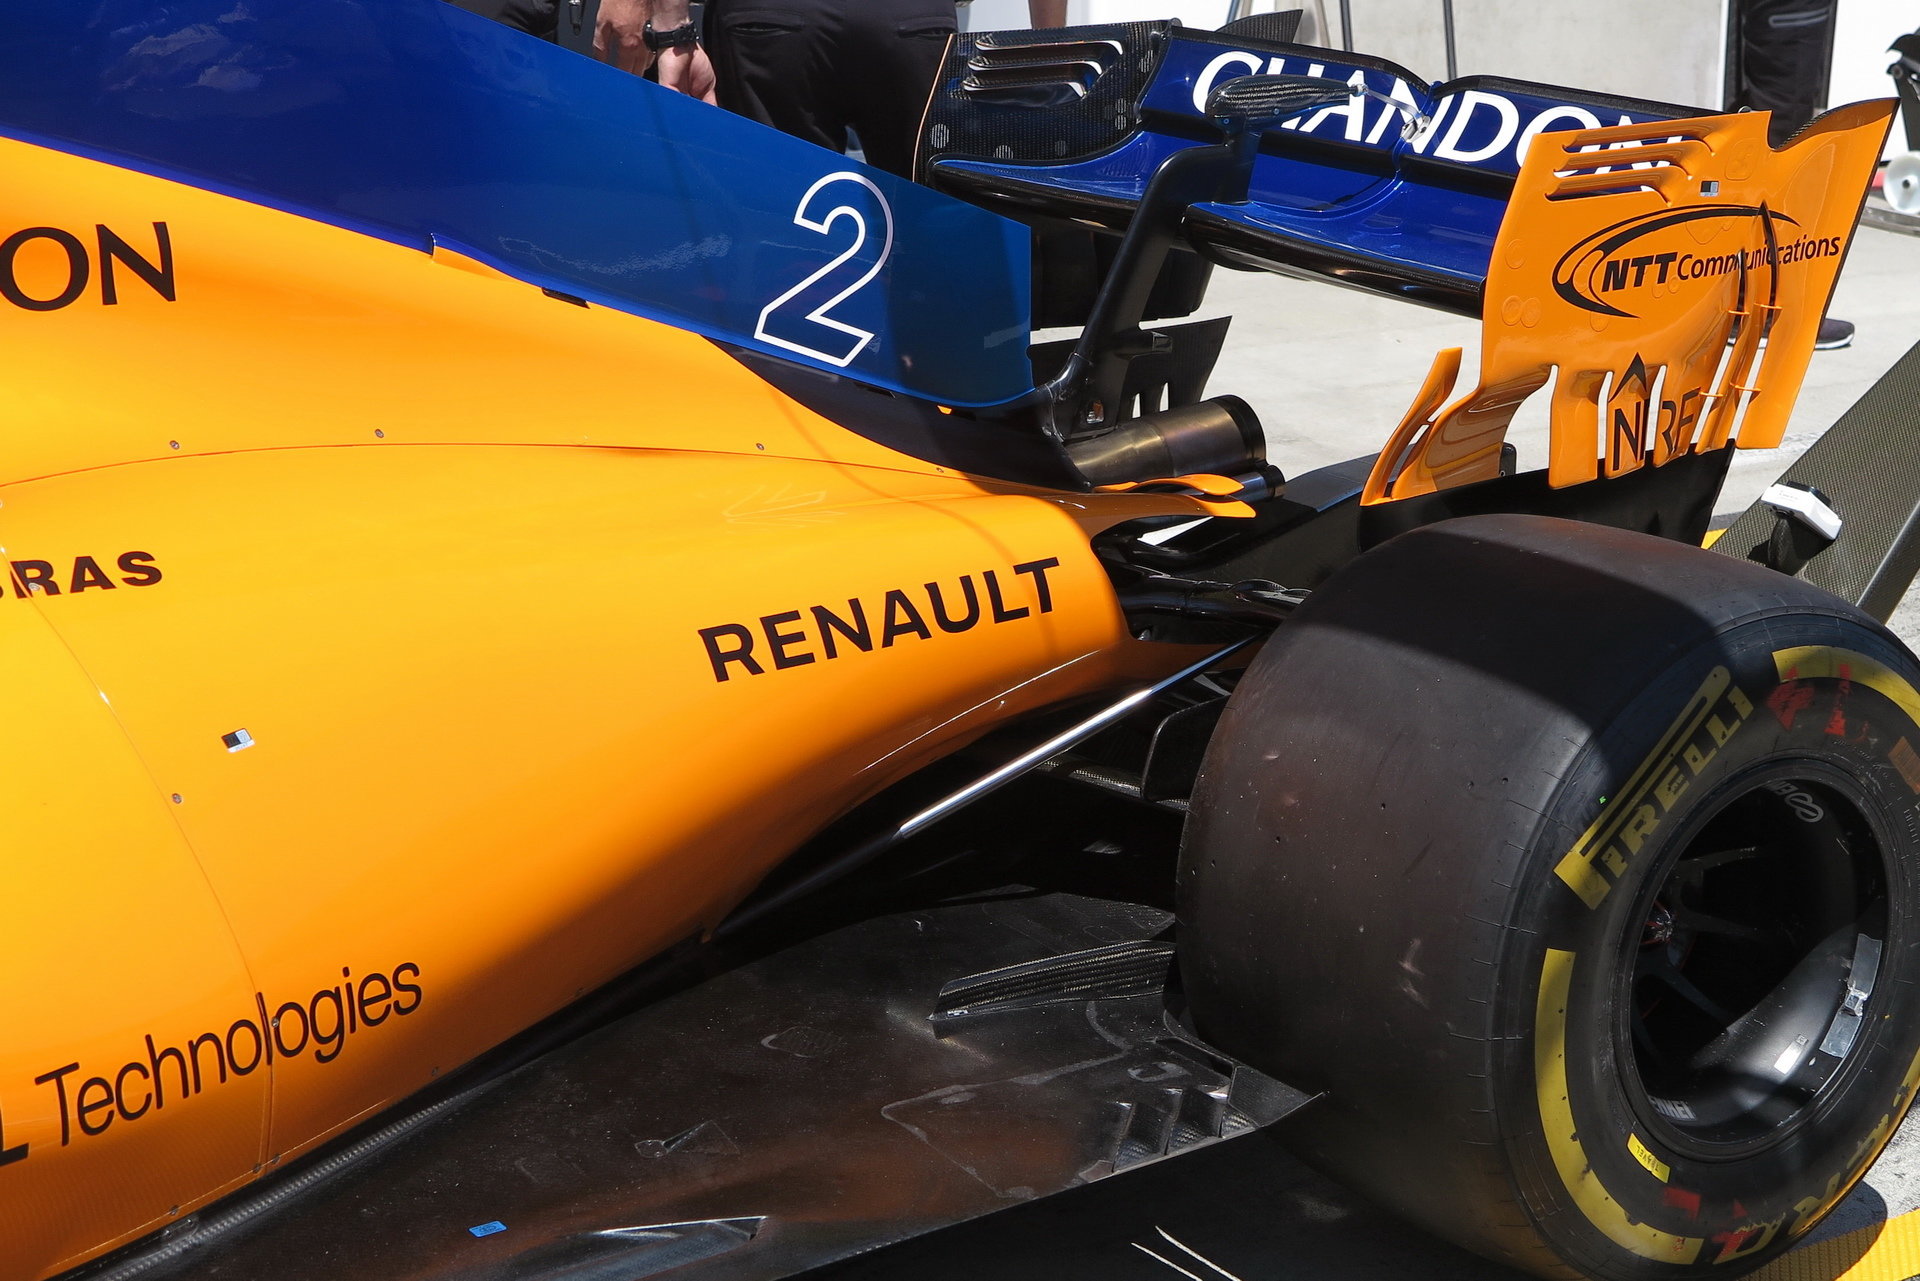 Detail podlahy McLarenu MCL33 v Rakousku